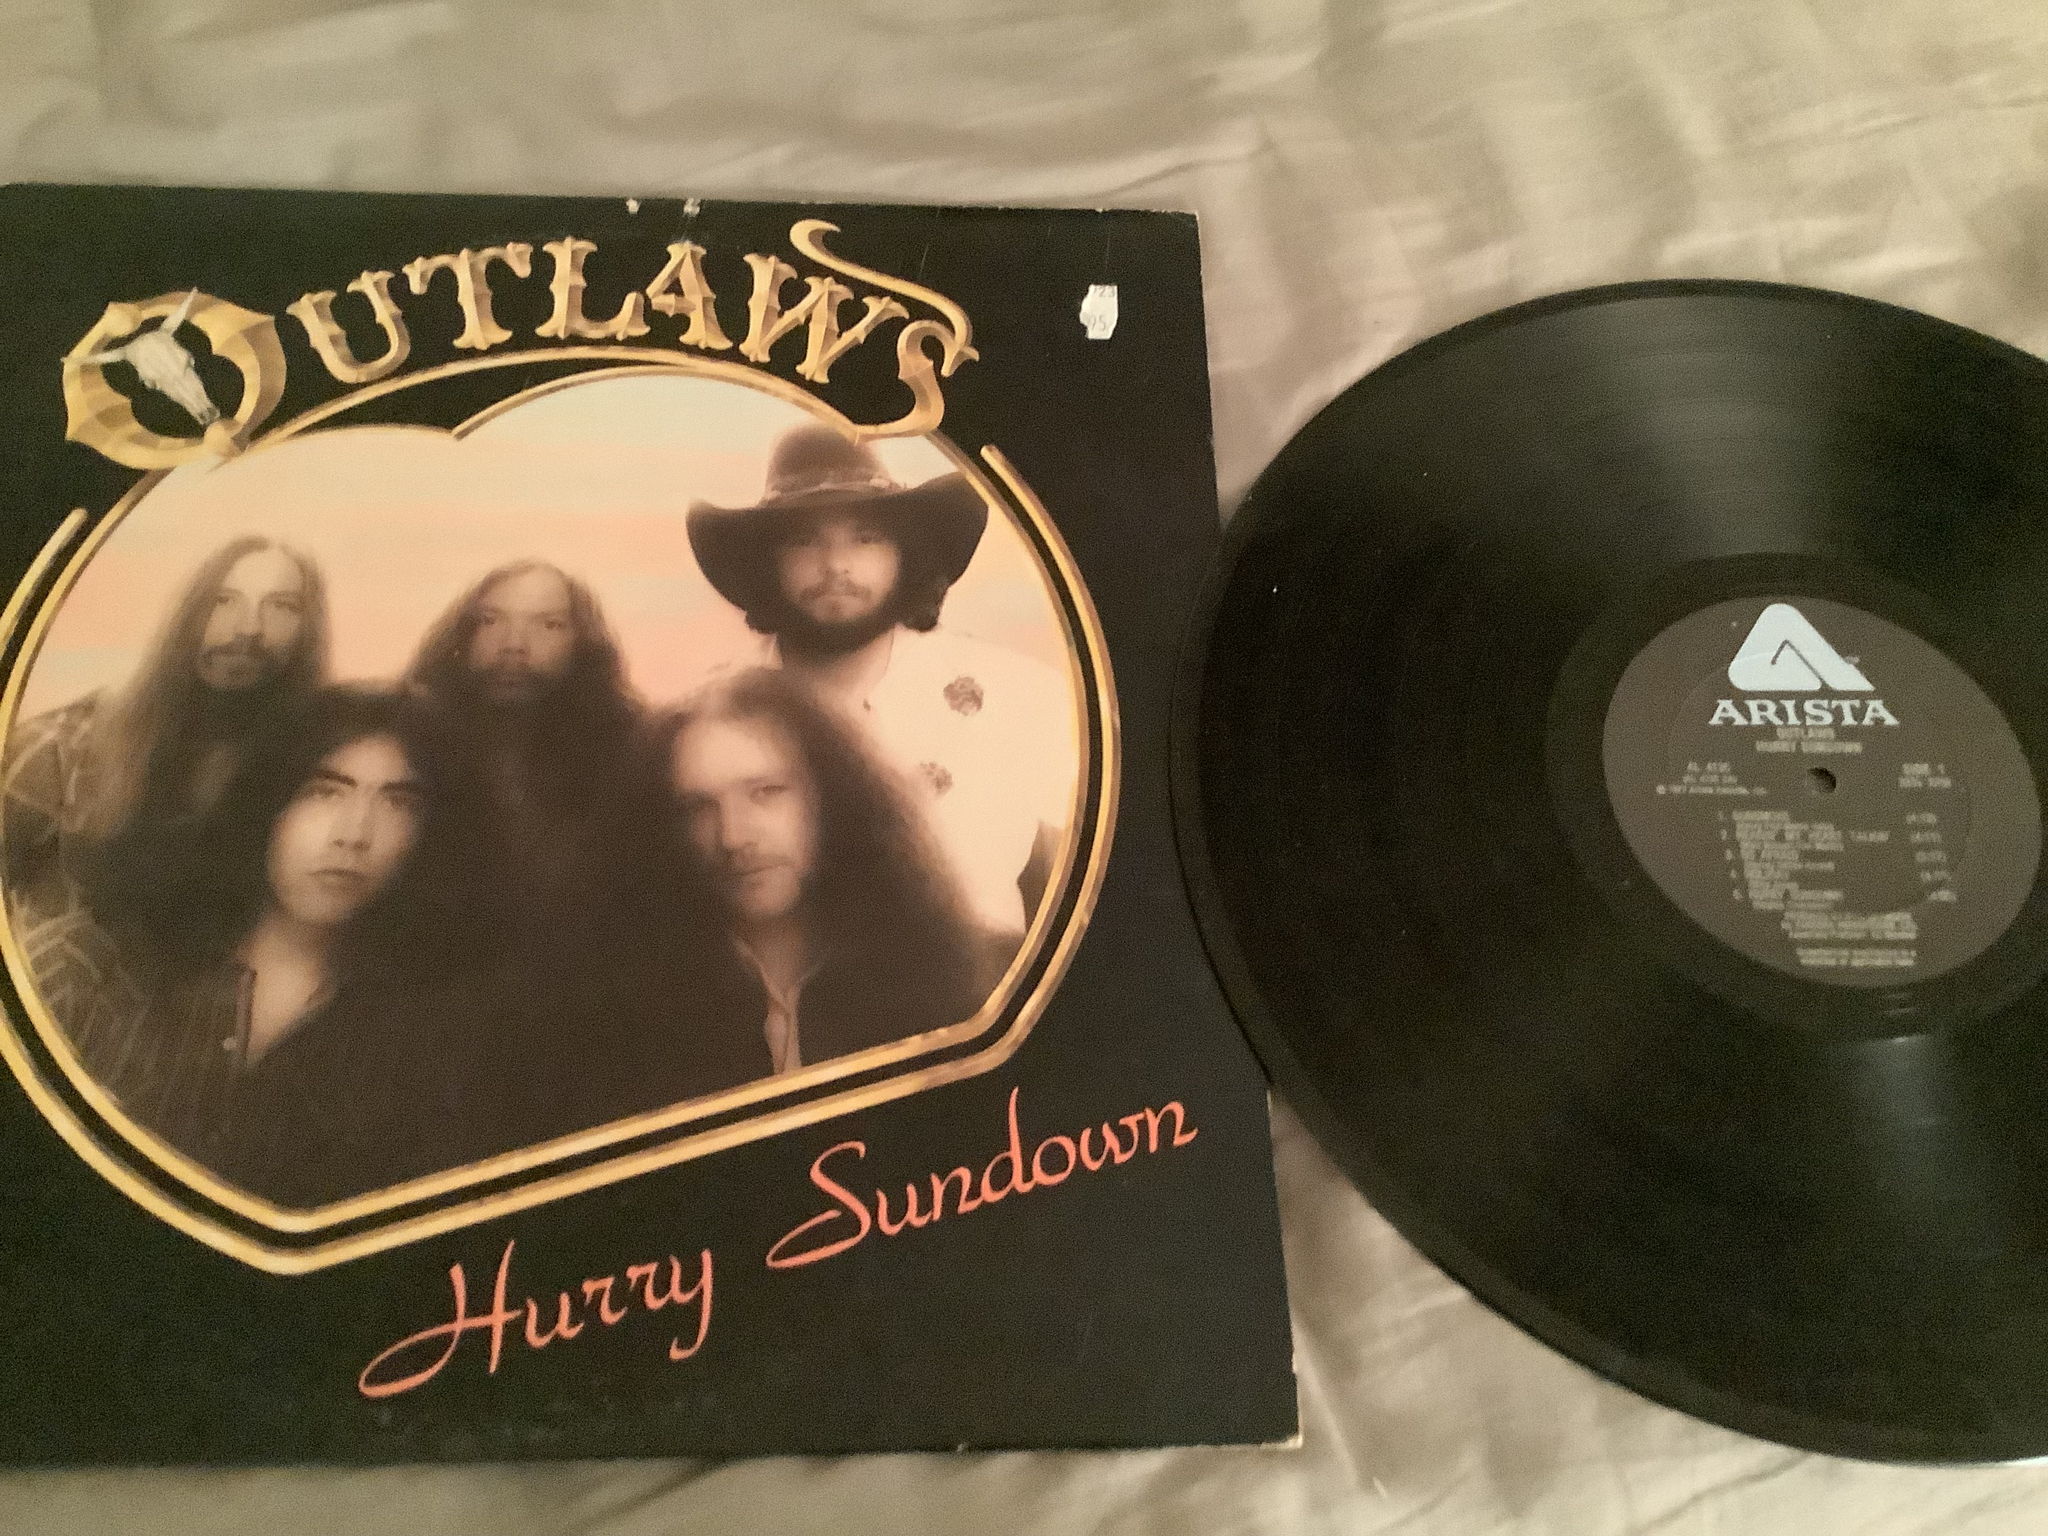 Outlaws Hurry Sundown